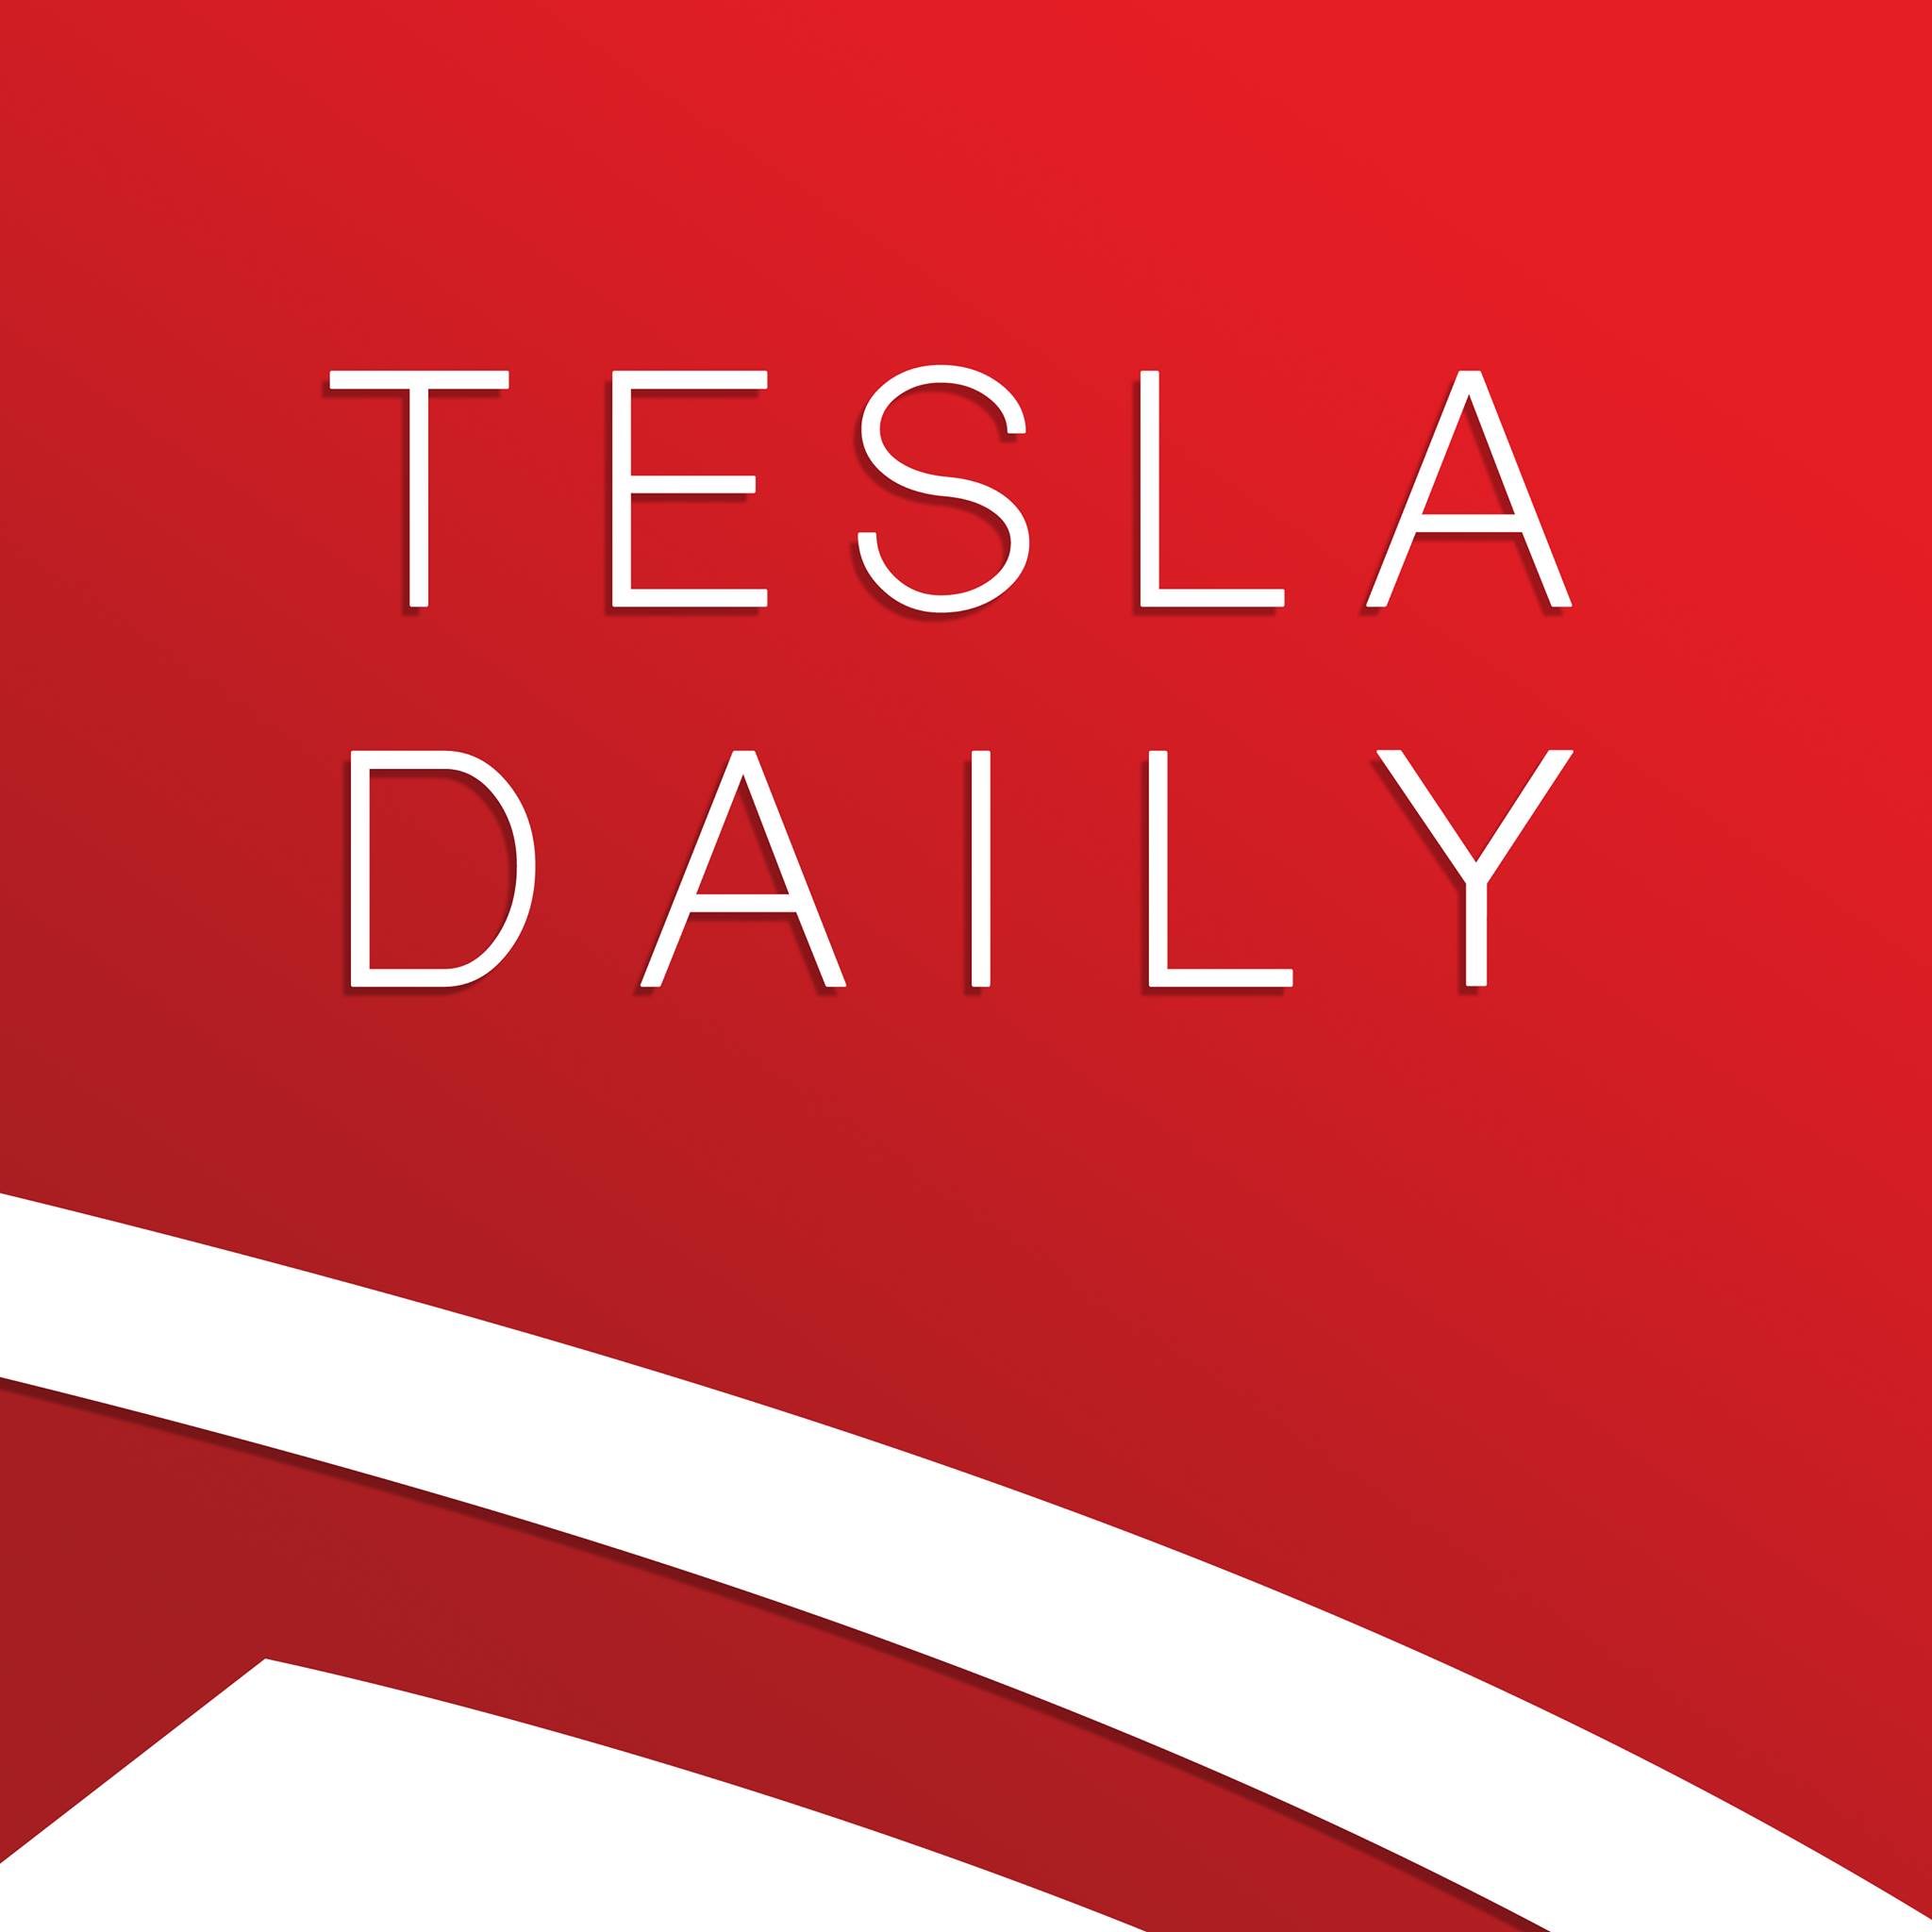 Tesla Daily: Tesla News & Analysis by Rob Maurer